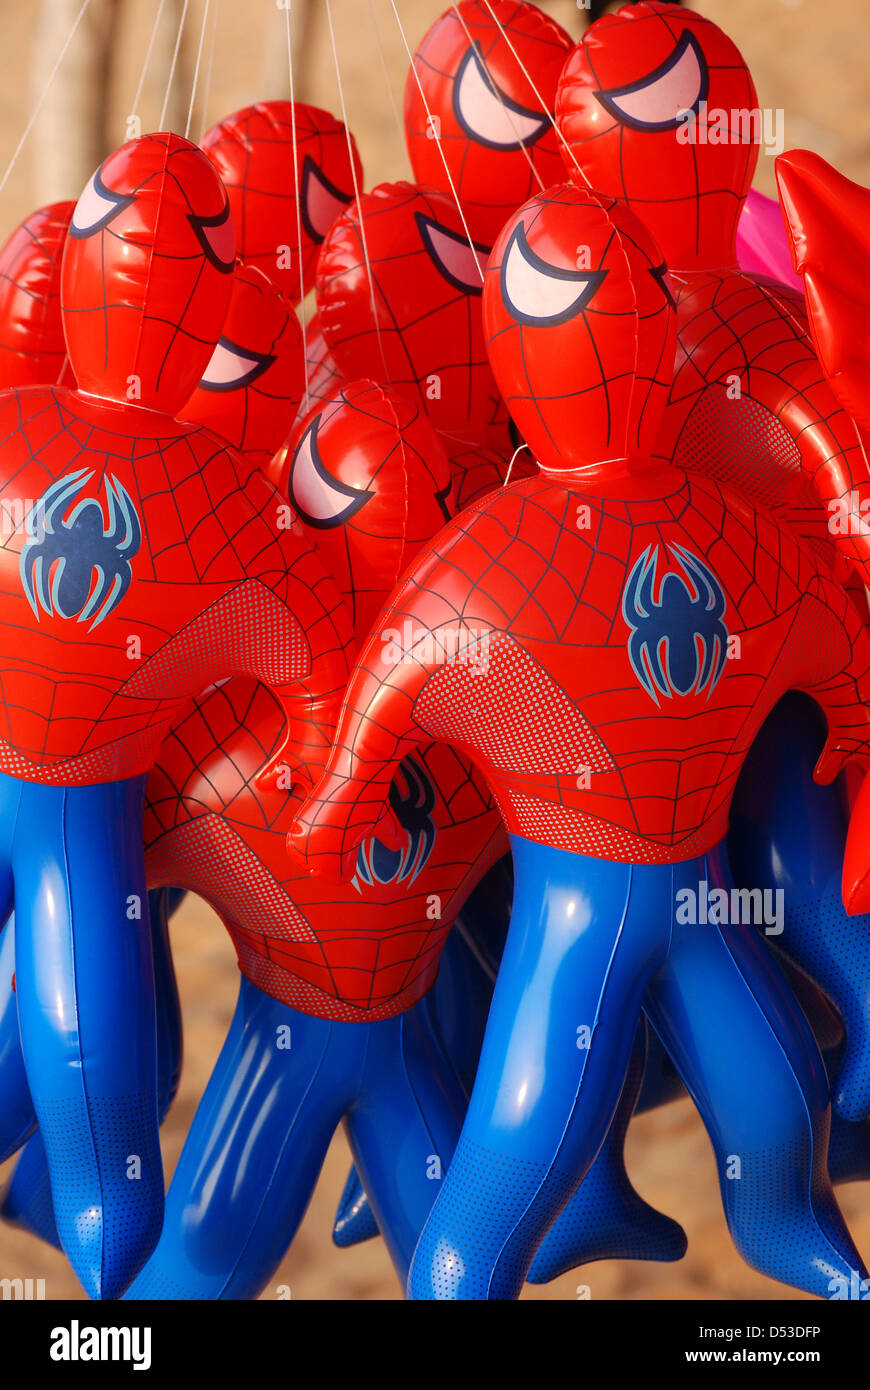 inflatable spiderman dolls,india Stock Photo